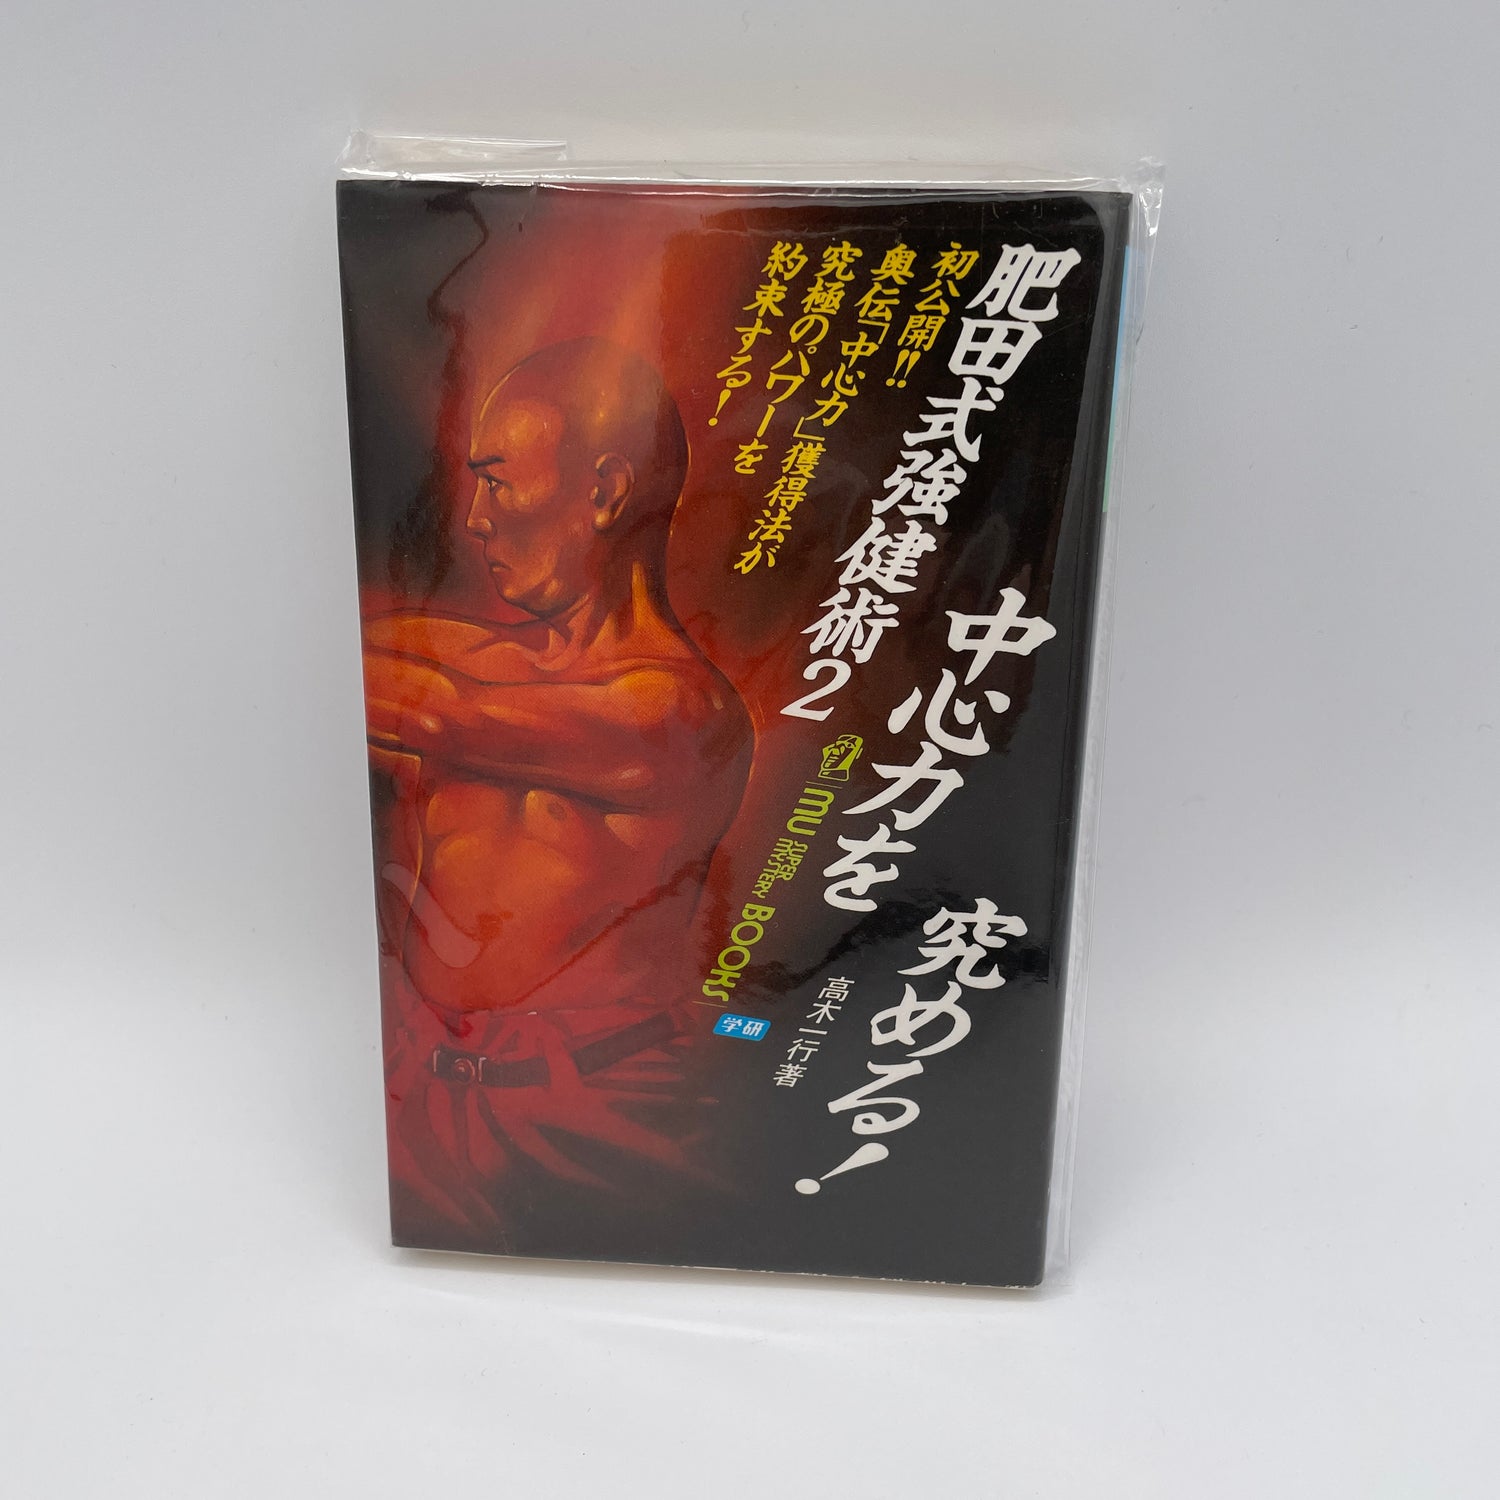 Libro de técnicas fuertes de estilo Hida 2: Chushin Ryoku de Ikko Takagi (usado)